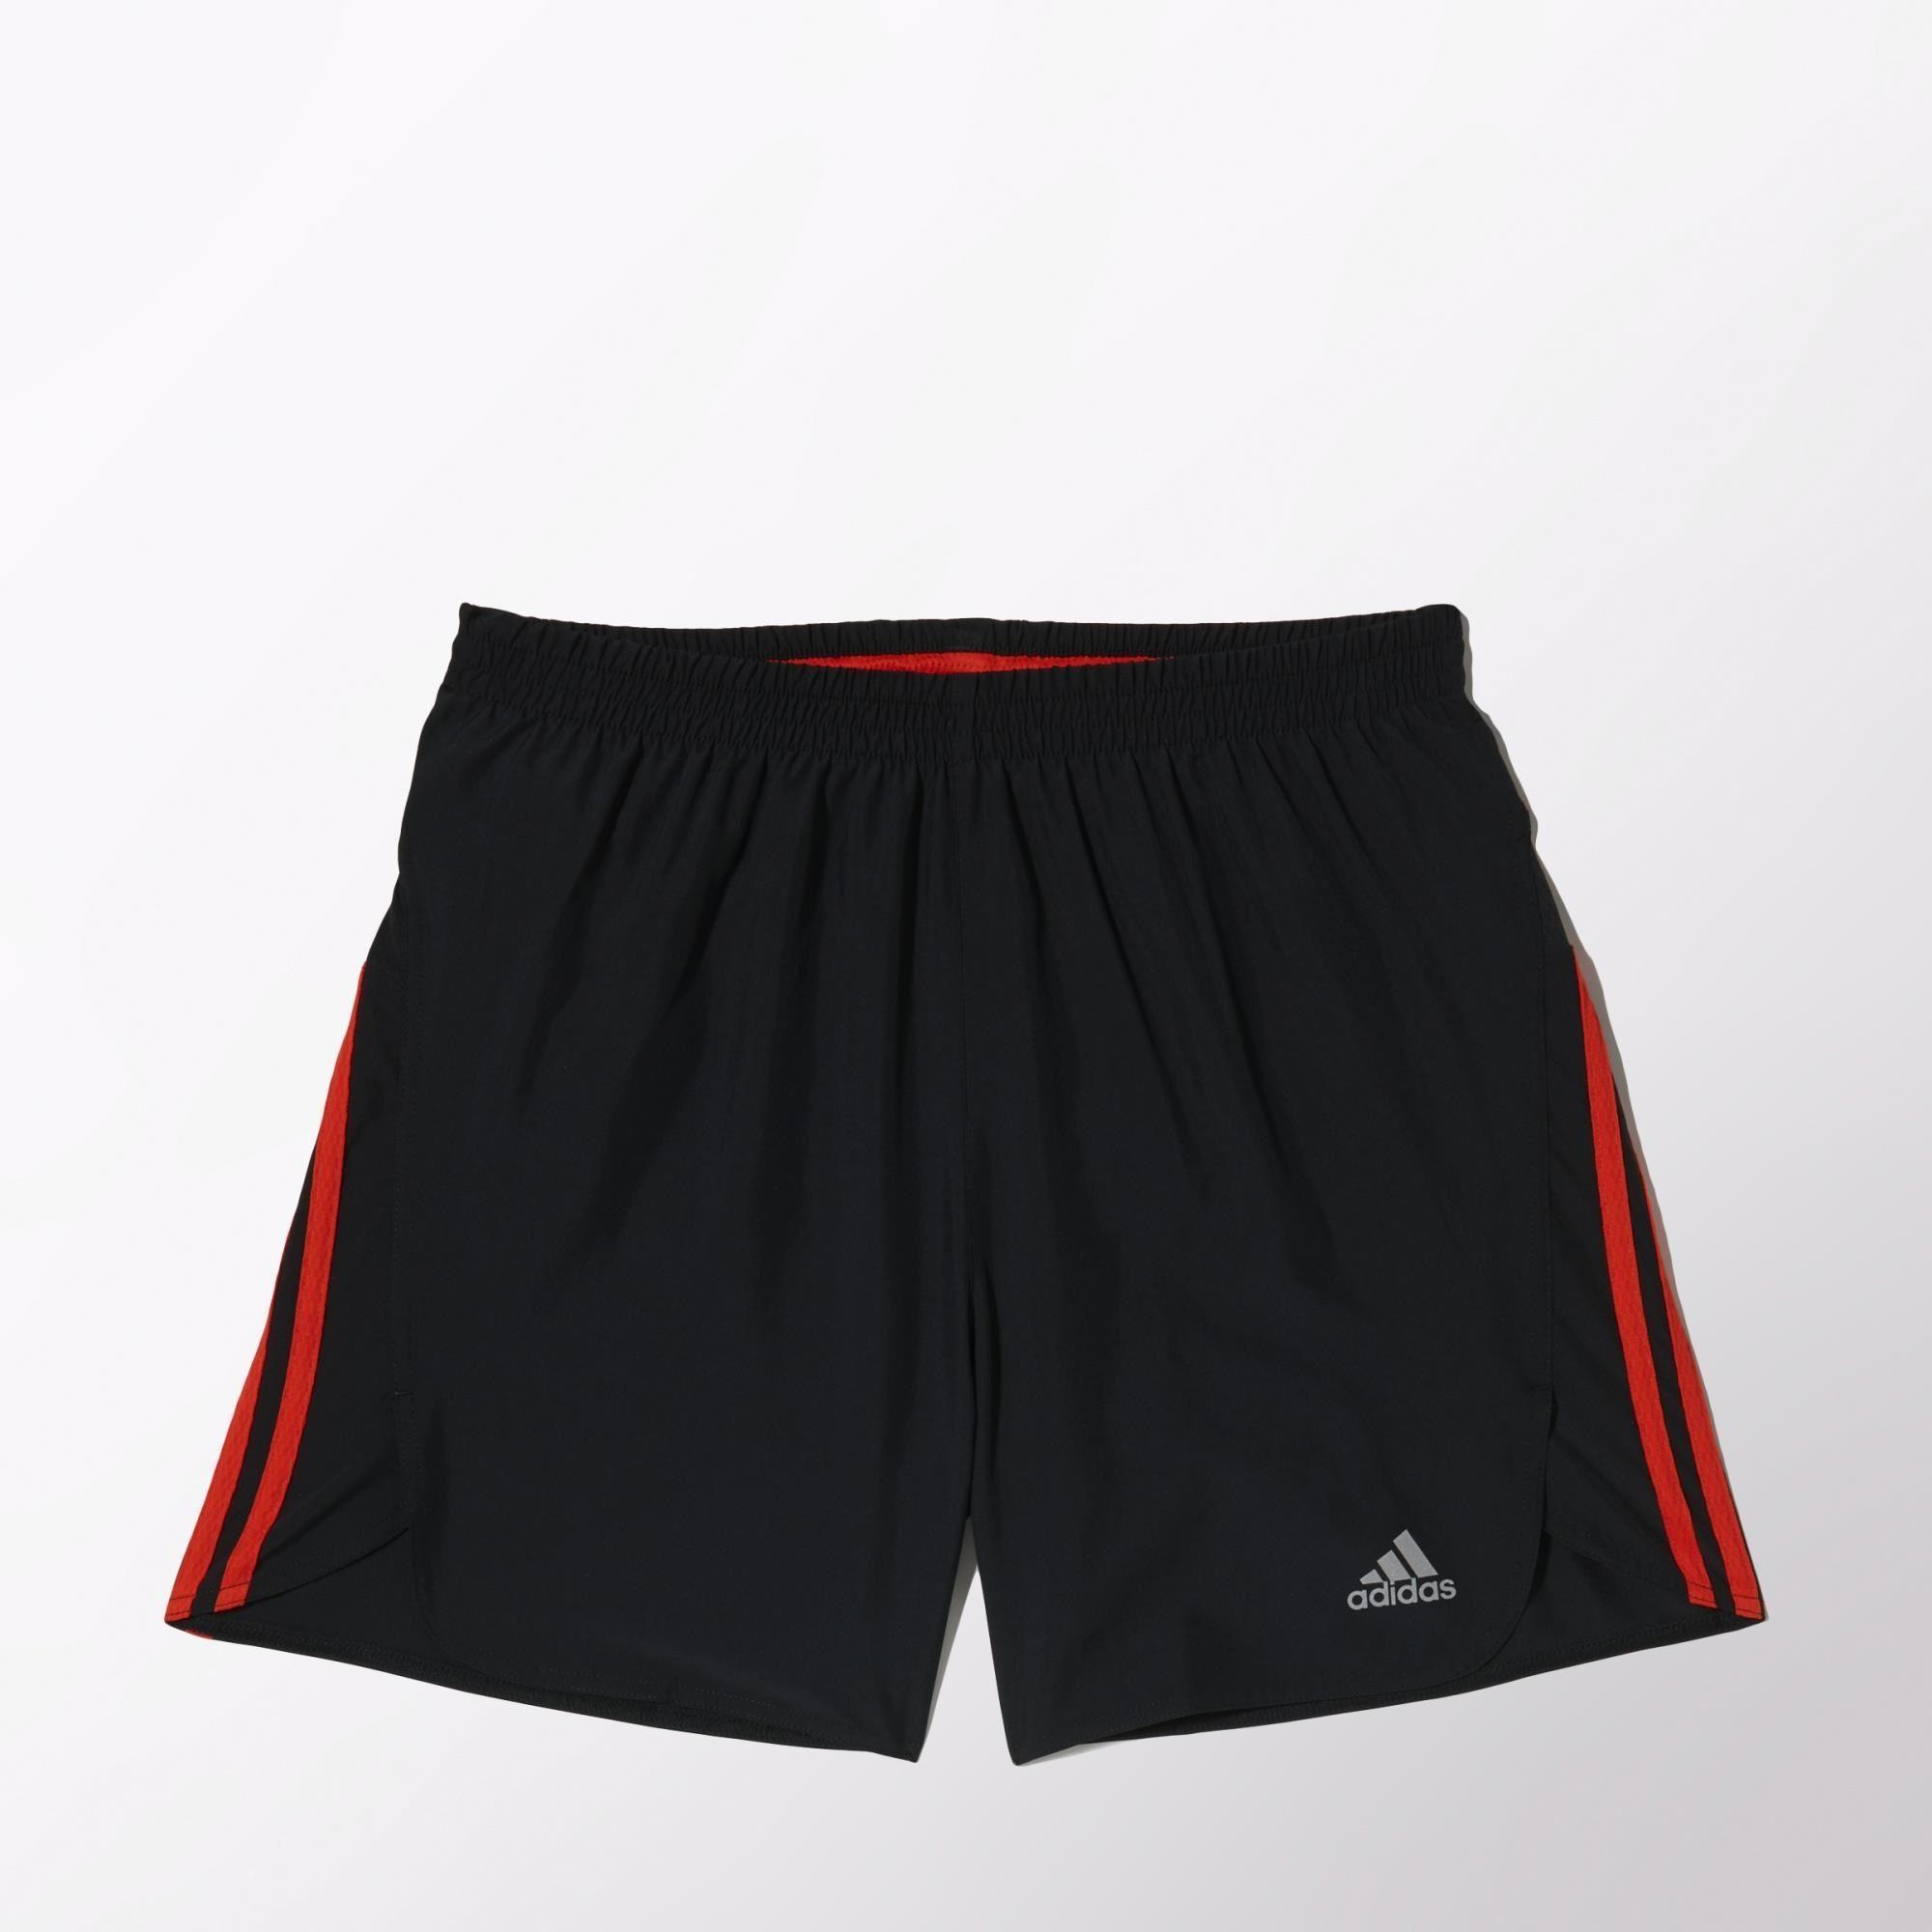 Adidas Response 5" Shorts - Black/Bold Orange - Tennisnuts.com